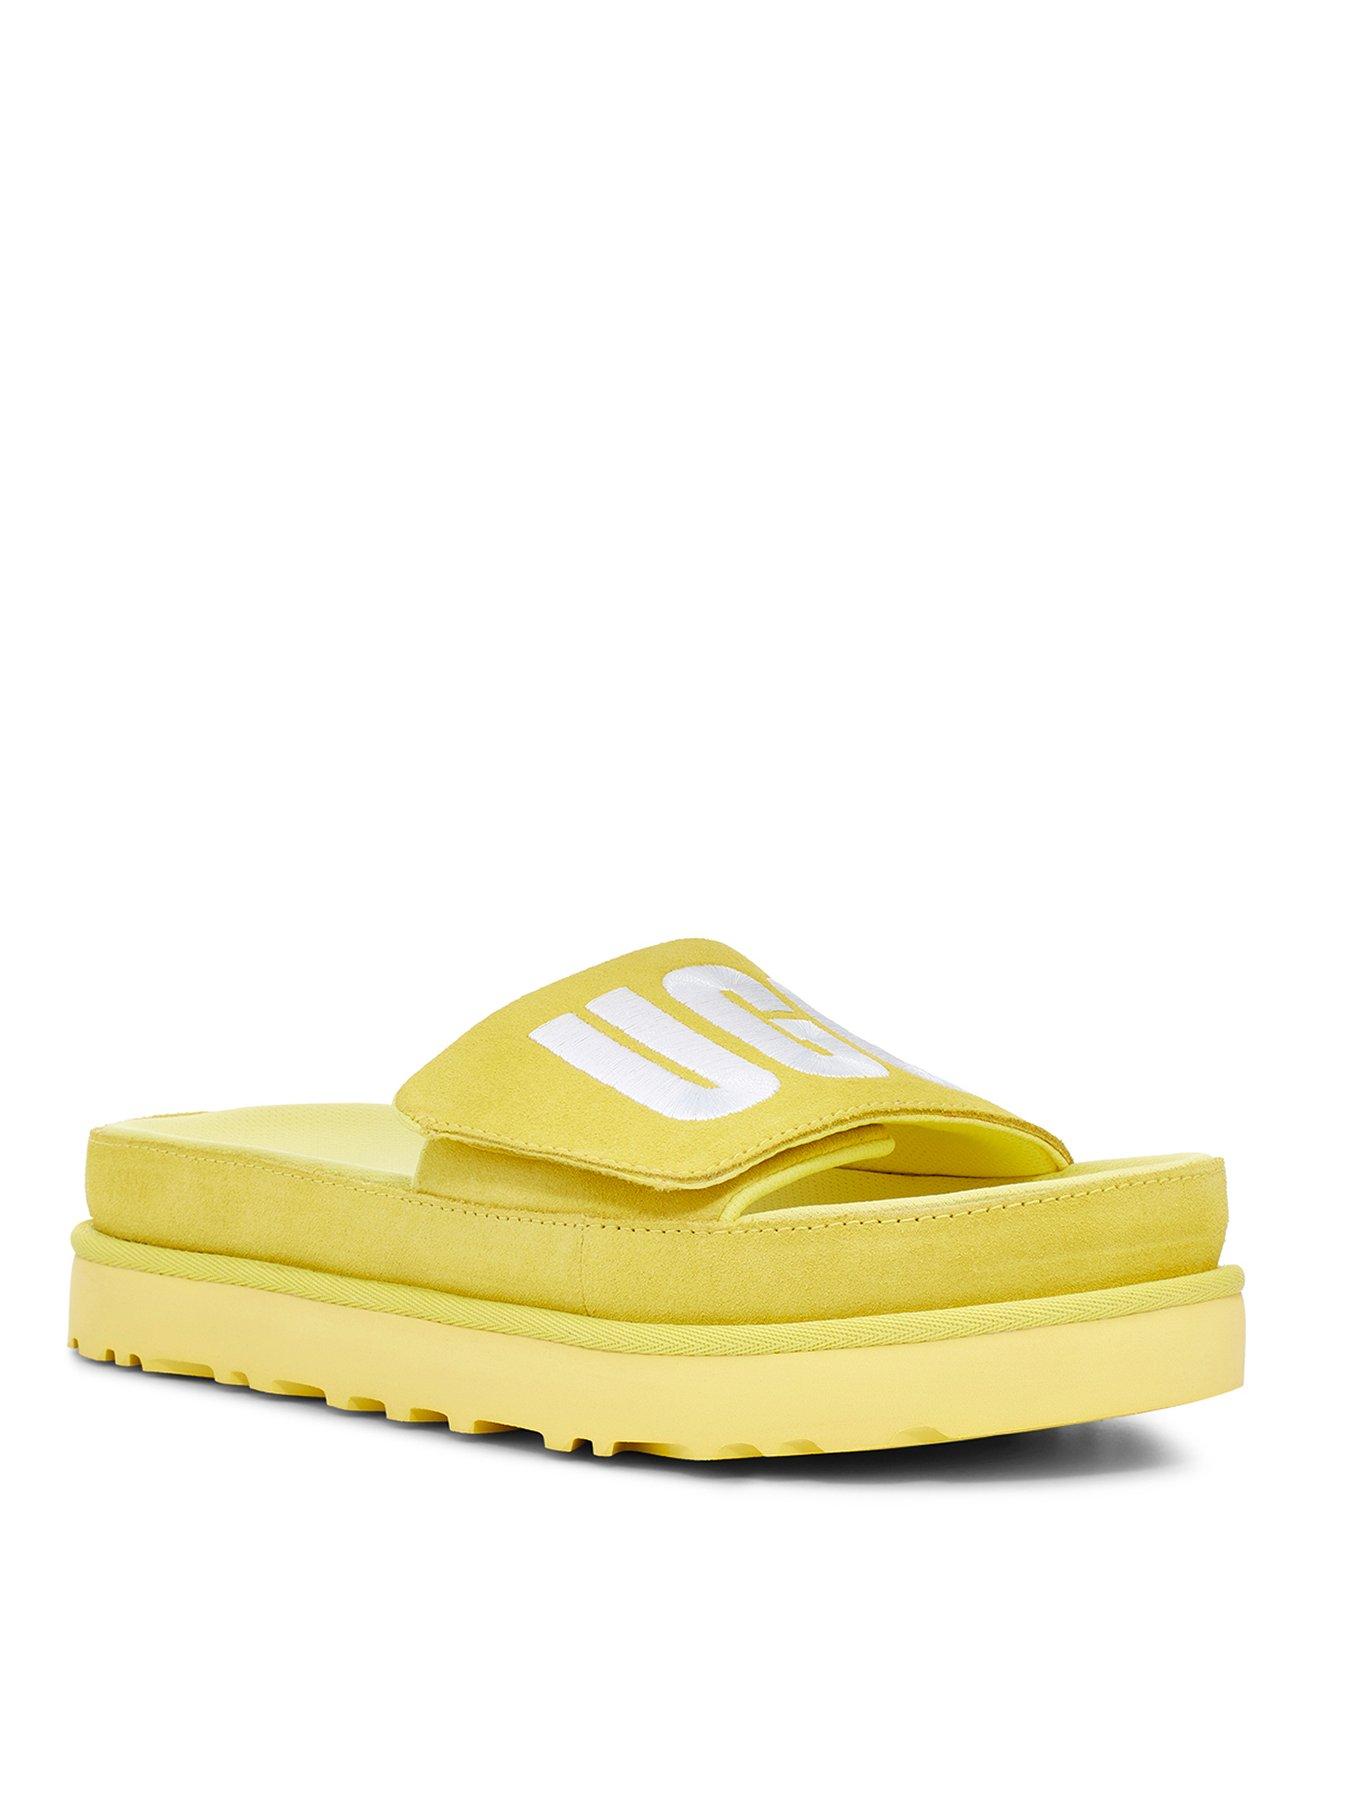 ugg yellow sandals